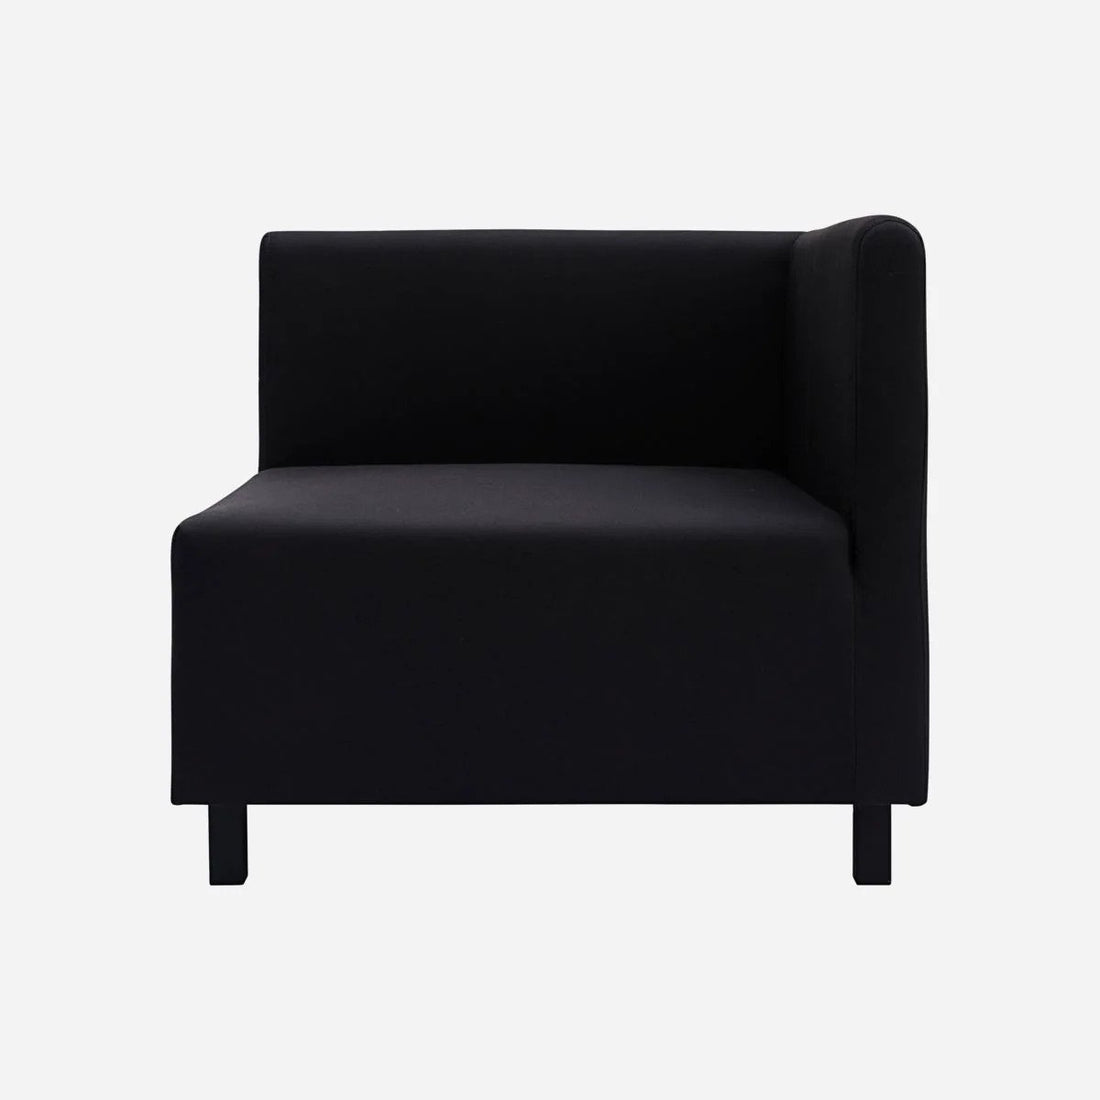 Hausarzt - Sofa, Eckabschnitt, schwarz 85x85x44 cm